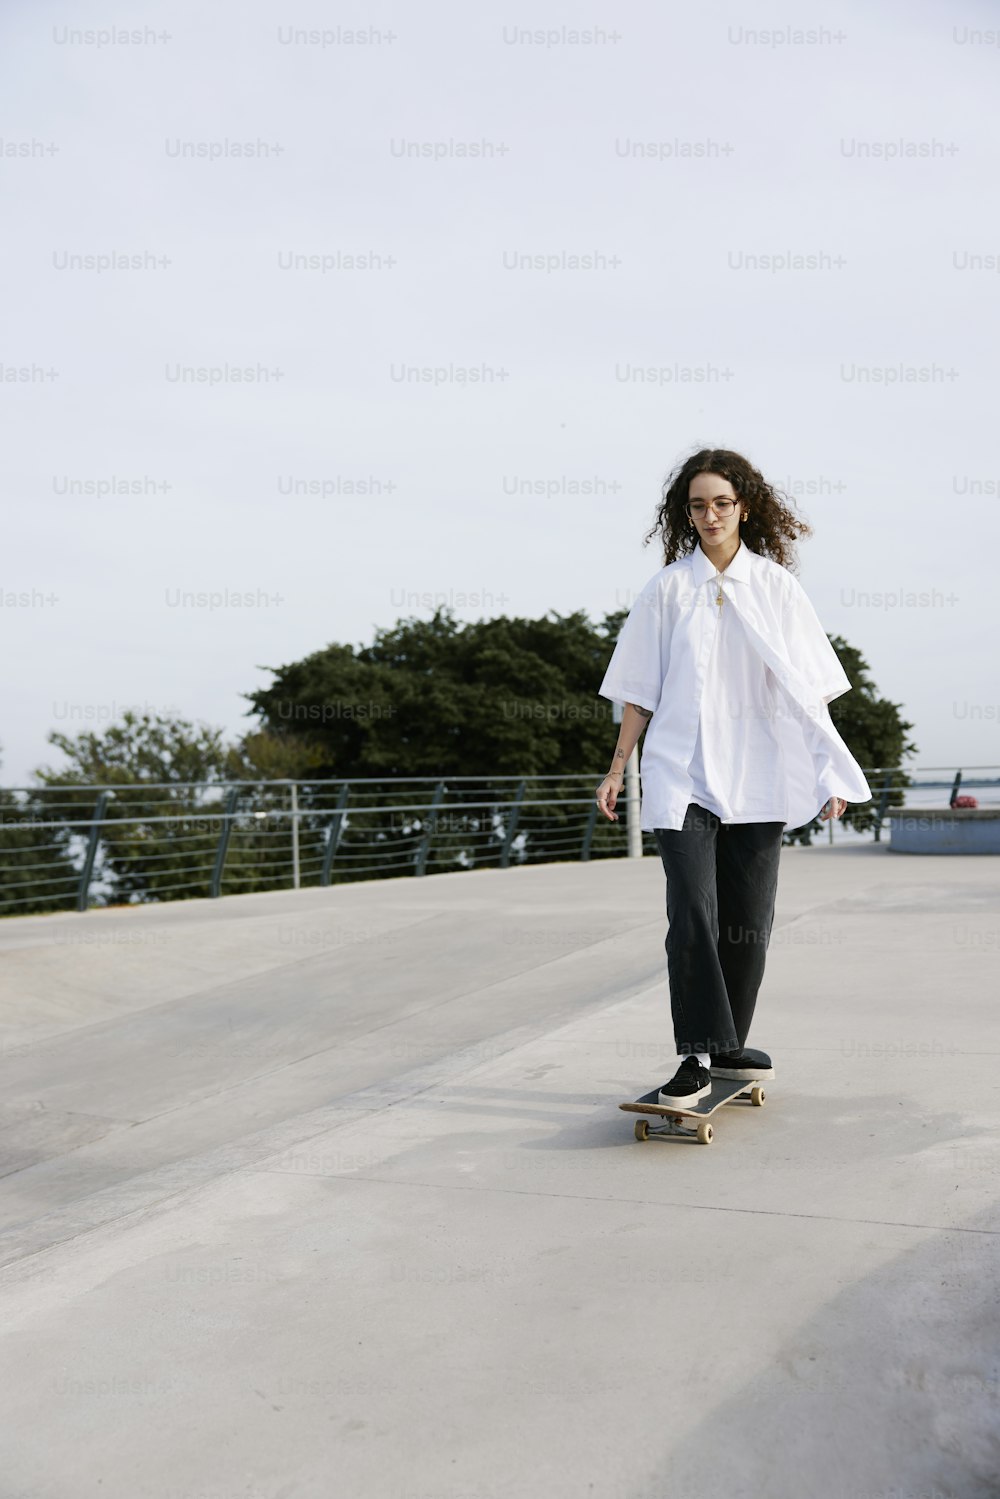 a woman riding a skateboard down a cement ramp